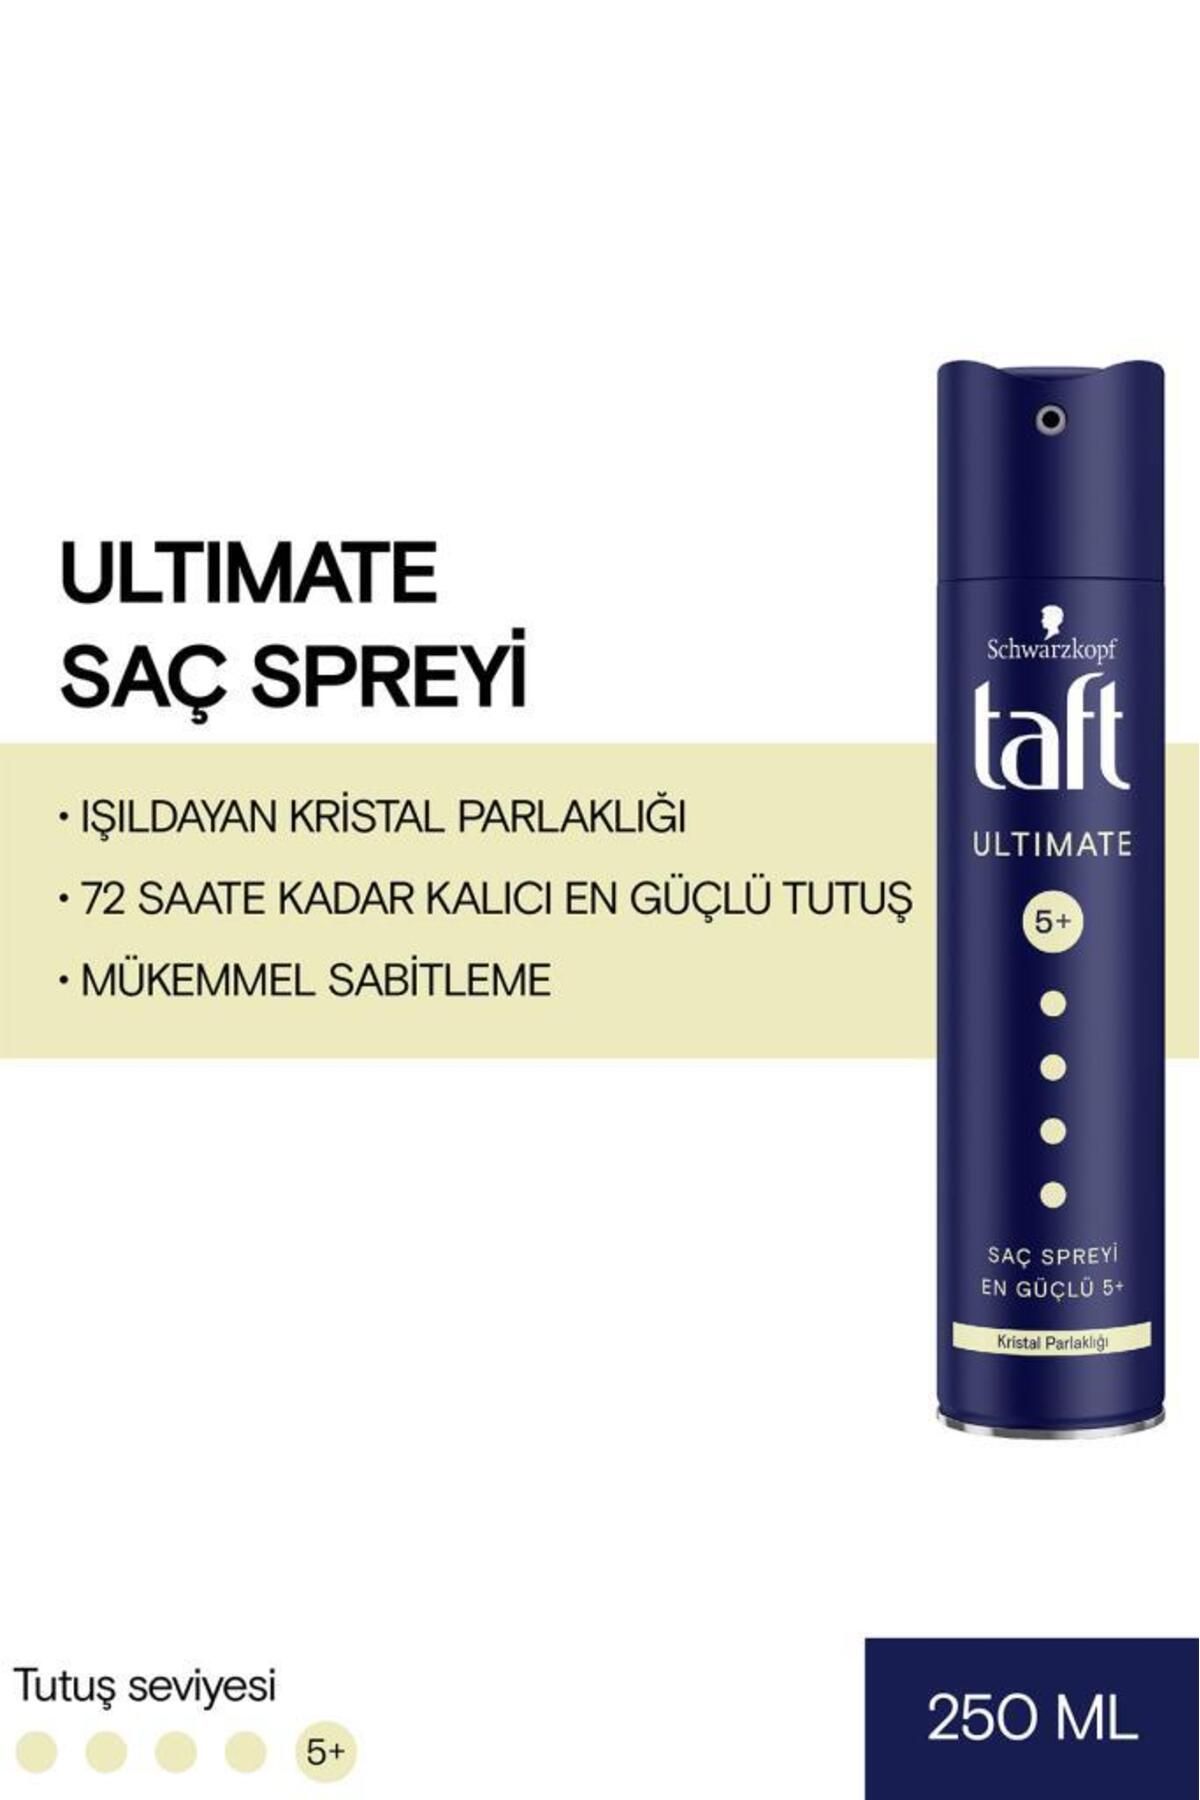 Schwarzkopf Taft Ultimate Sprey 250 ml (KRİSTAL PARLAKLIĞI)